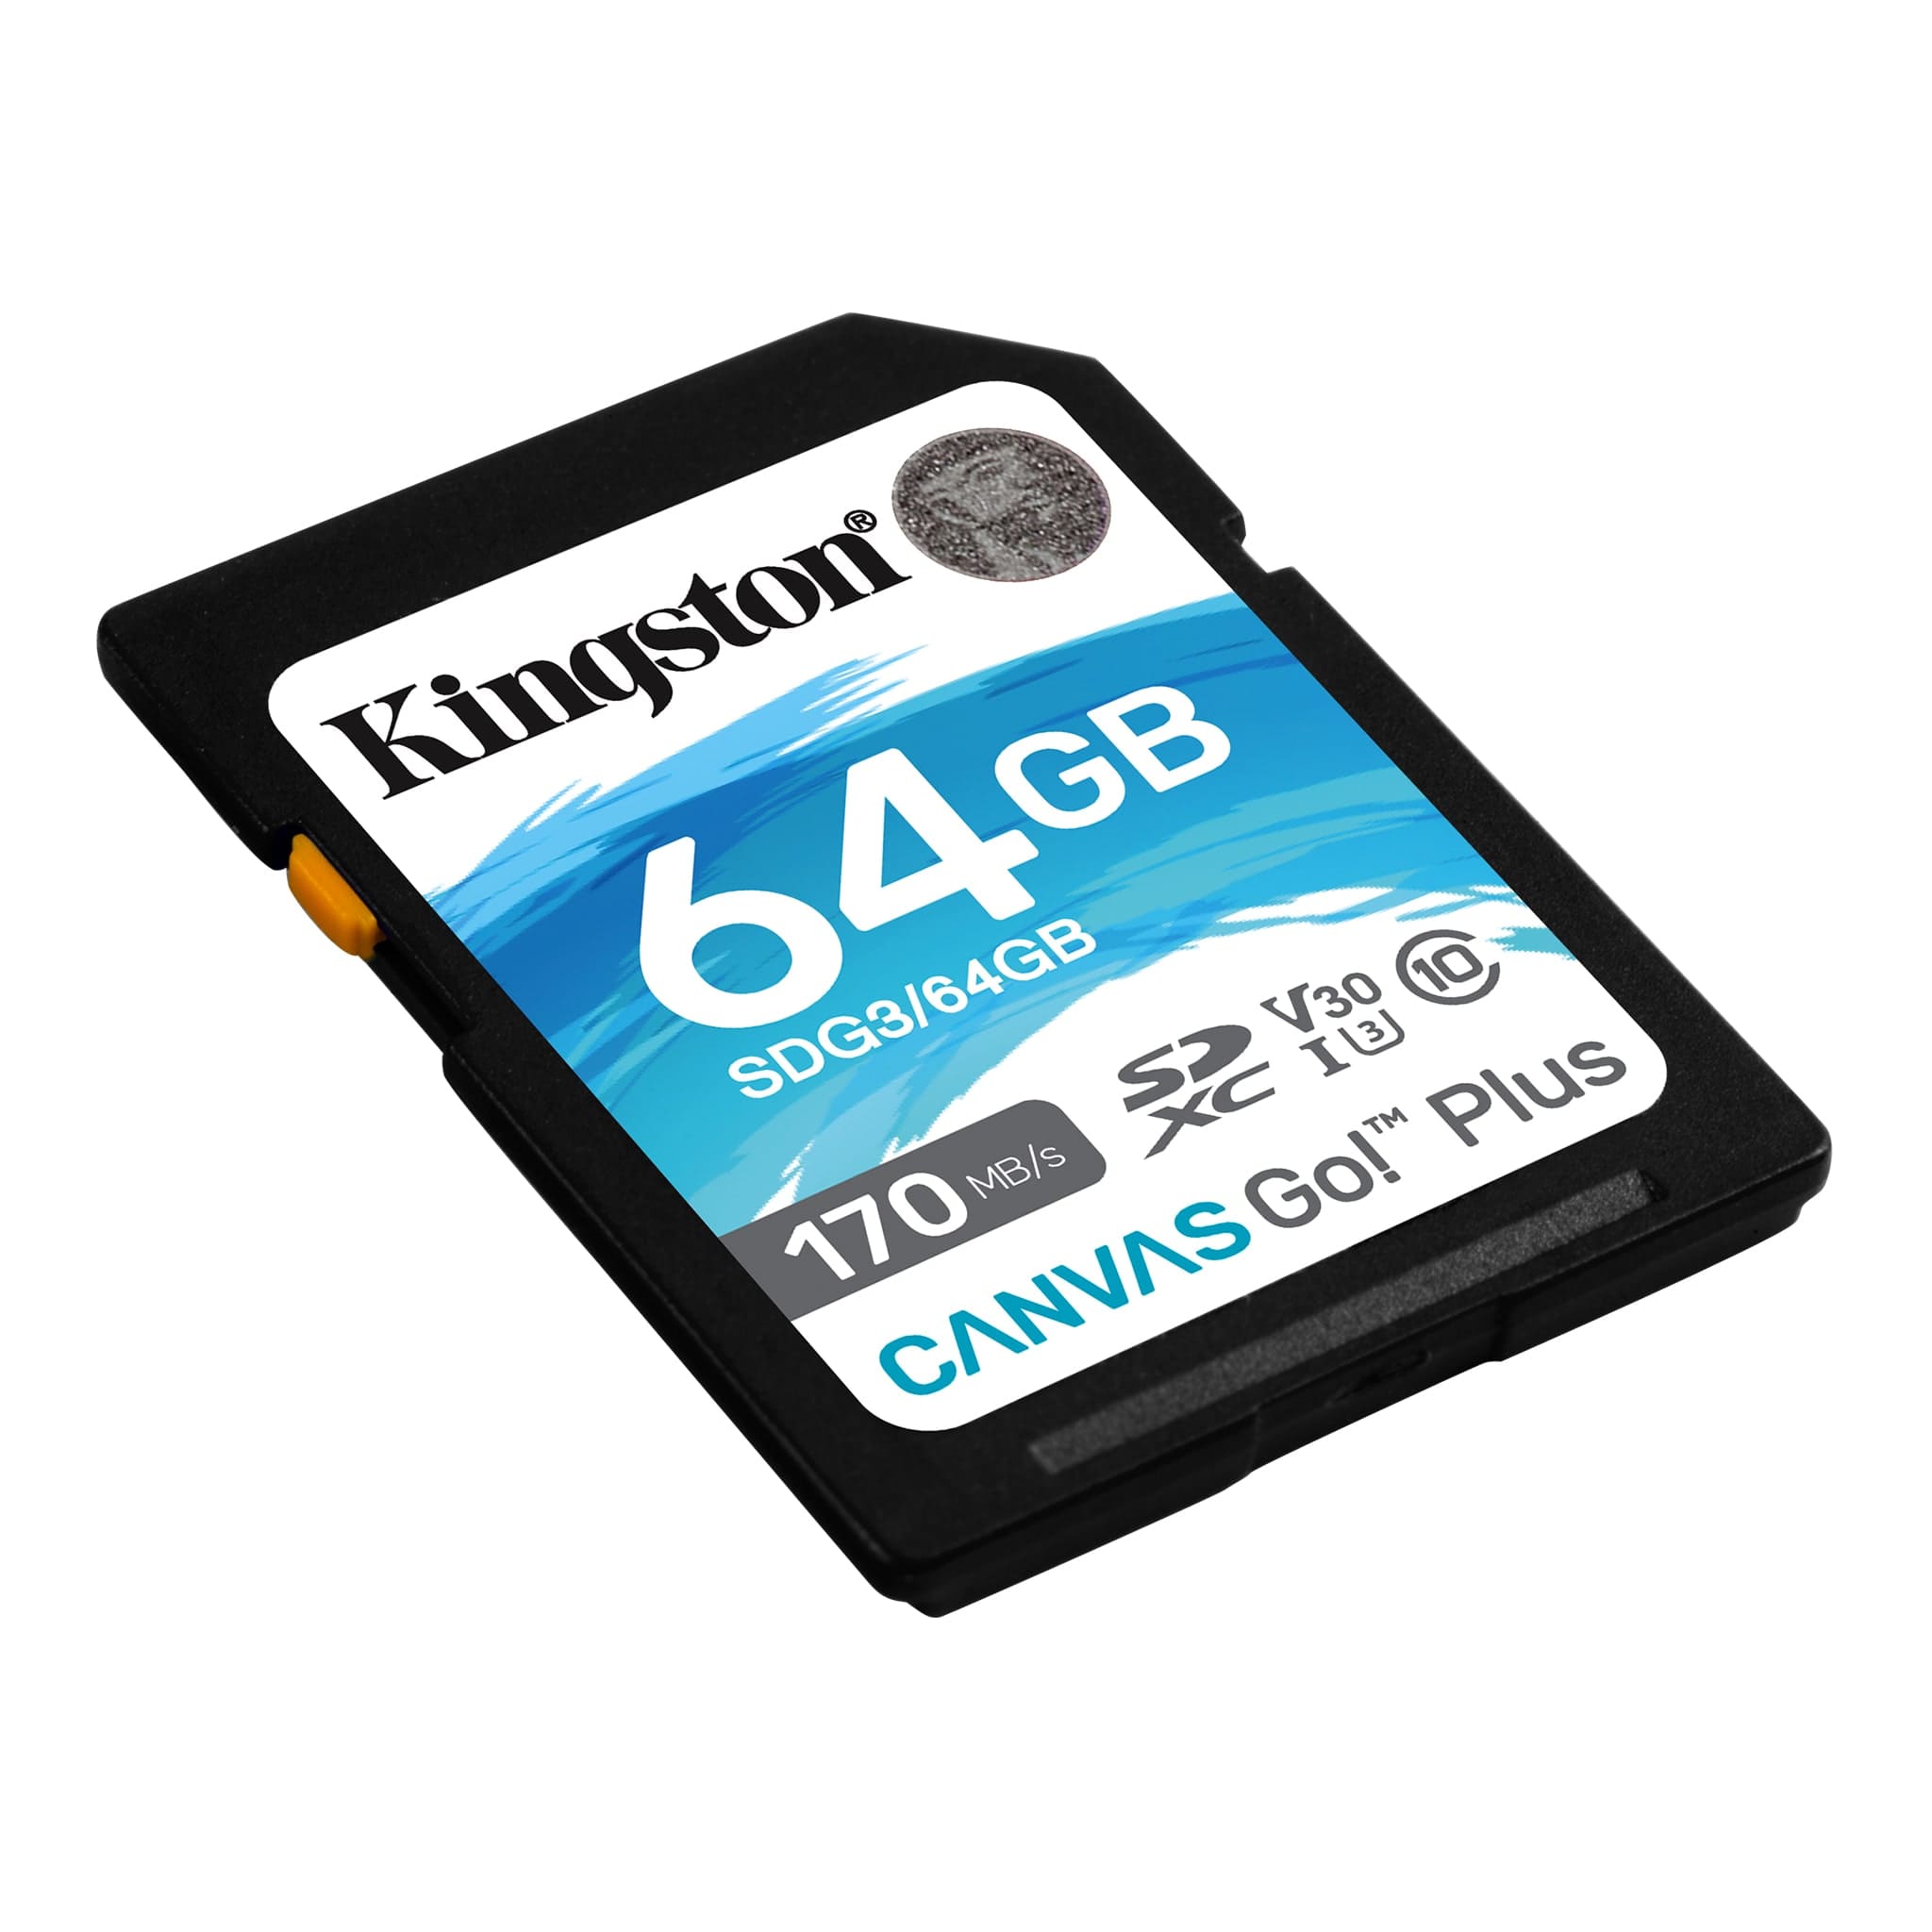 MEMORIA MICRO SD 64GB 100MB/S CANVAS KINGSTON - TodoVision